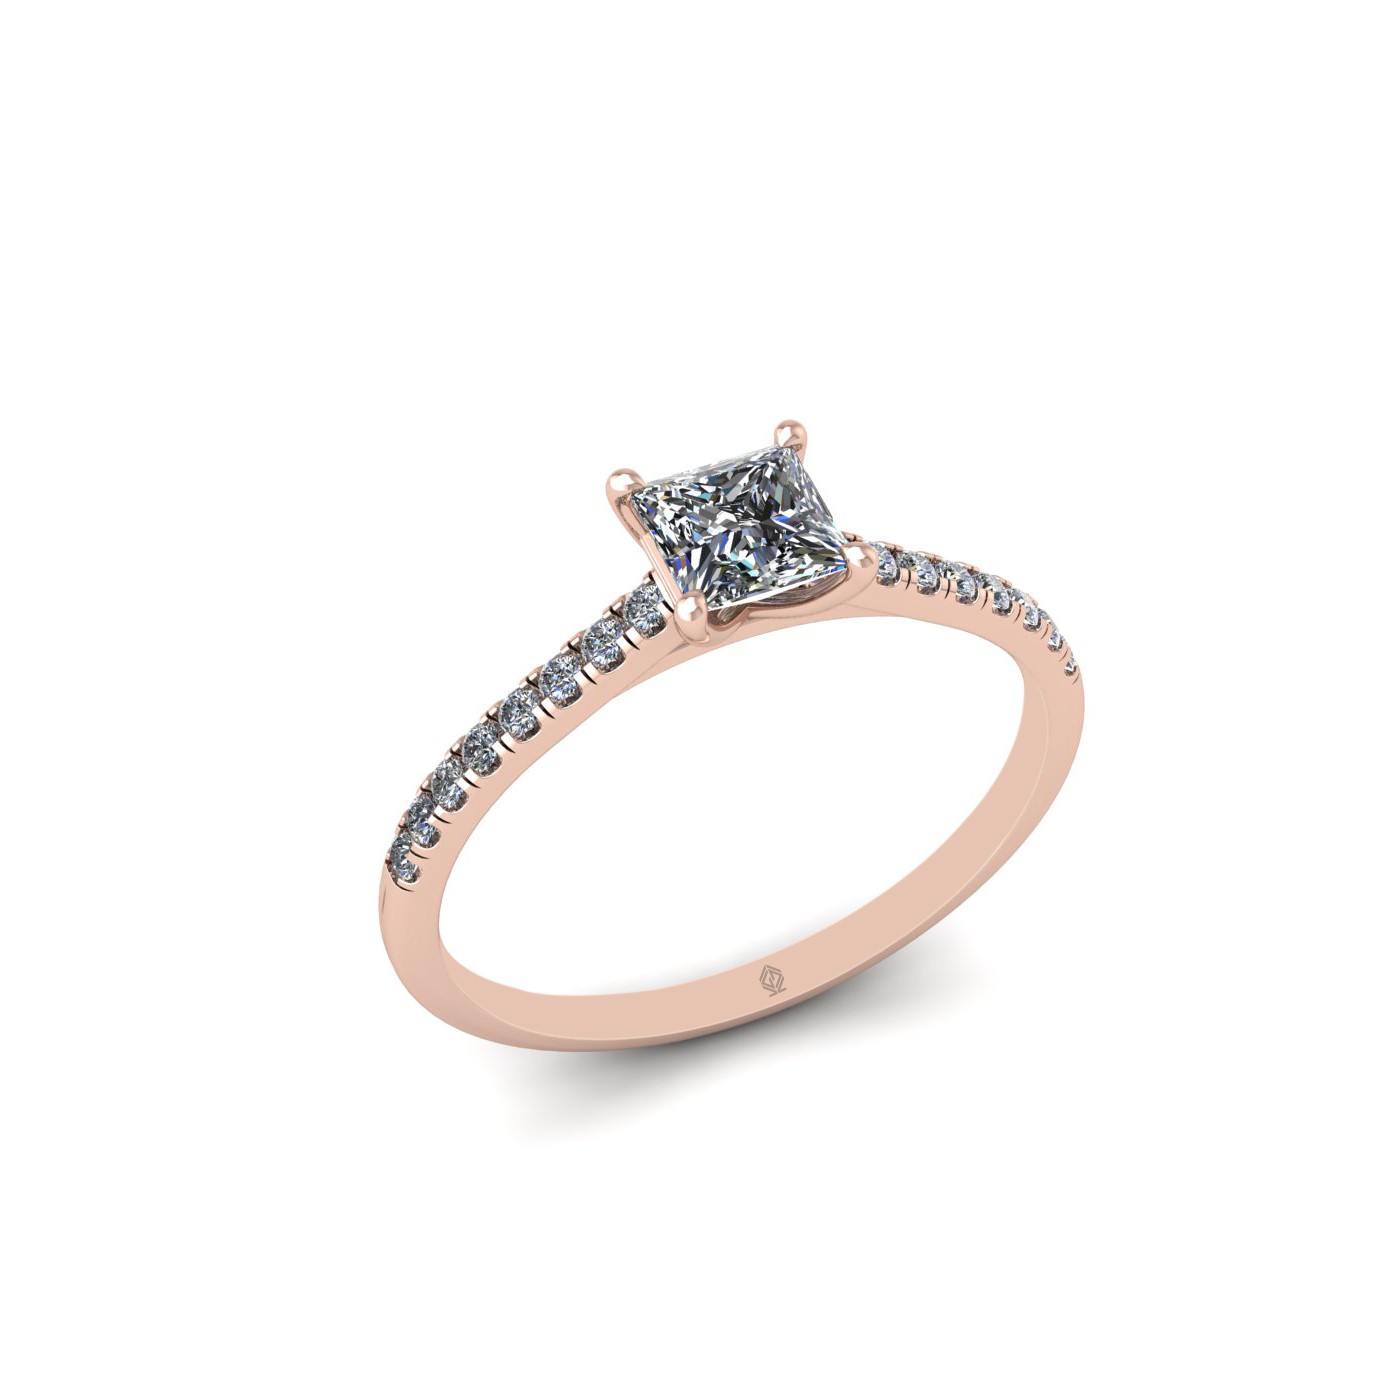 18k rose gold 0,50 ct 4 prongs princess cut diamond engagement ring with whisper thin pavÉ set band